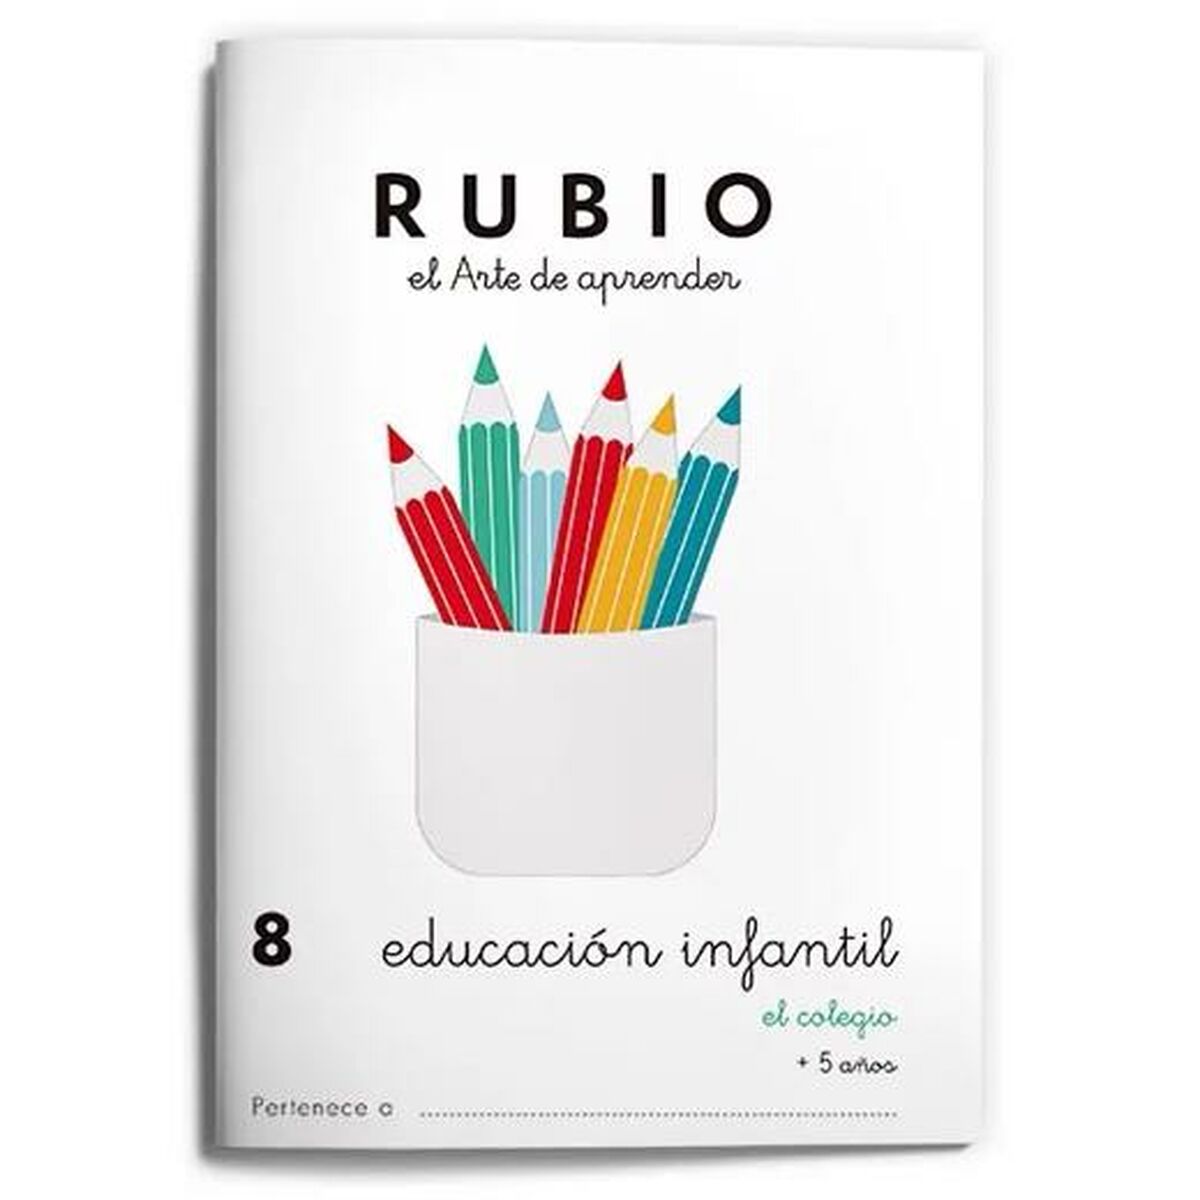 Early Childhood Education Notebook Rubio Nº8 A5 Espanja (10 osaa)